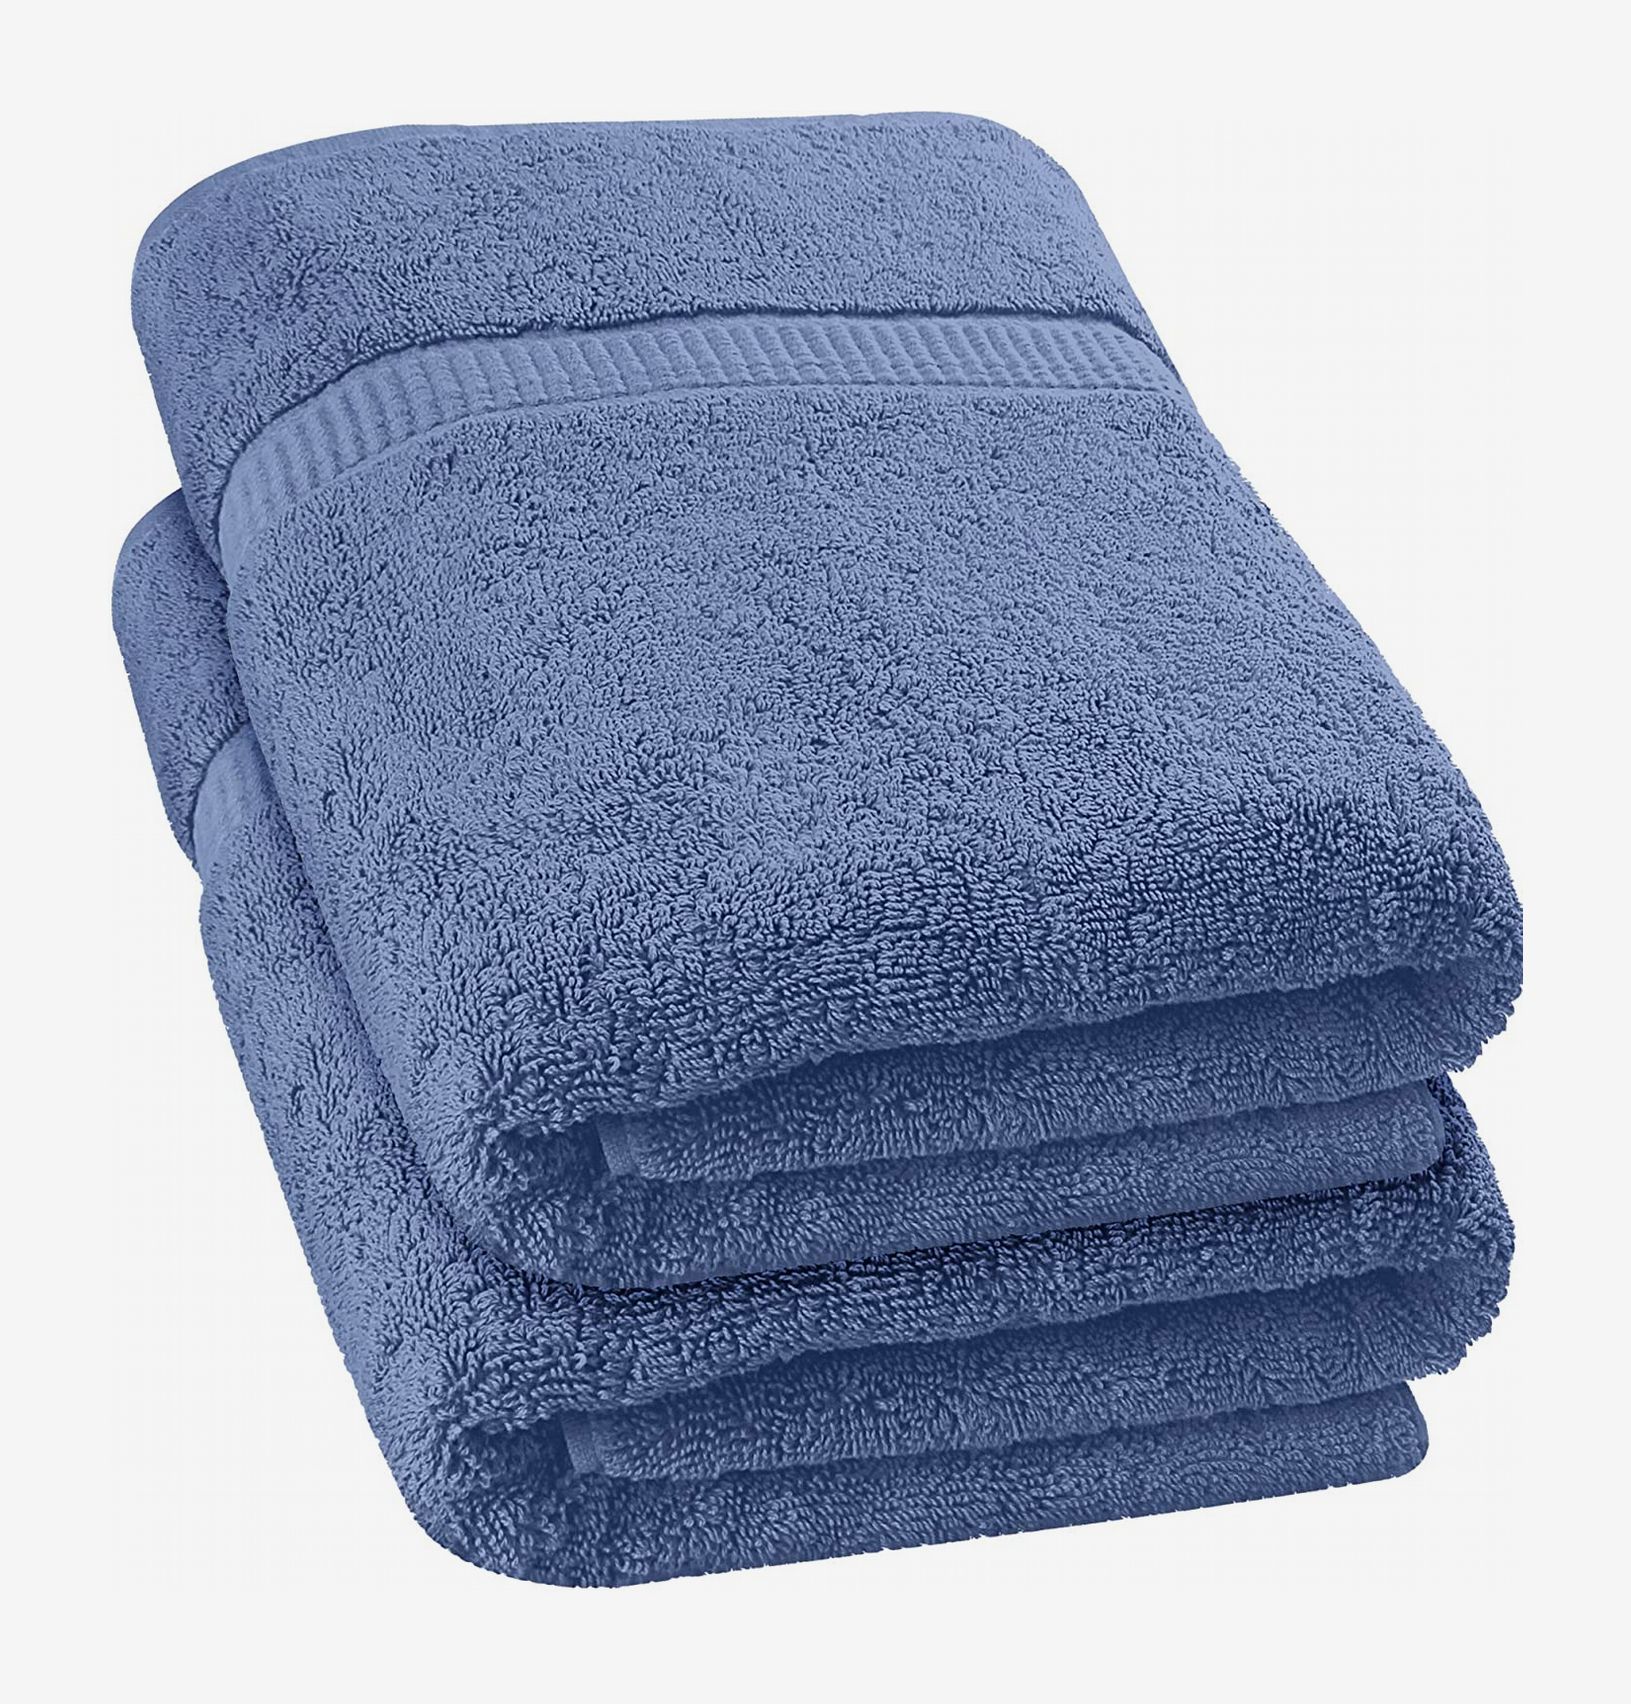 Homer-Simpson Bath Towels Beach Towel Bath Towel Antibacterial Absorbent Soft 130 x 80 cm